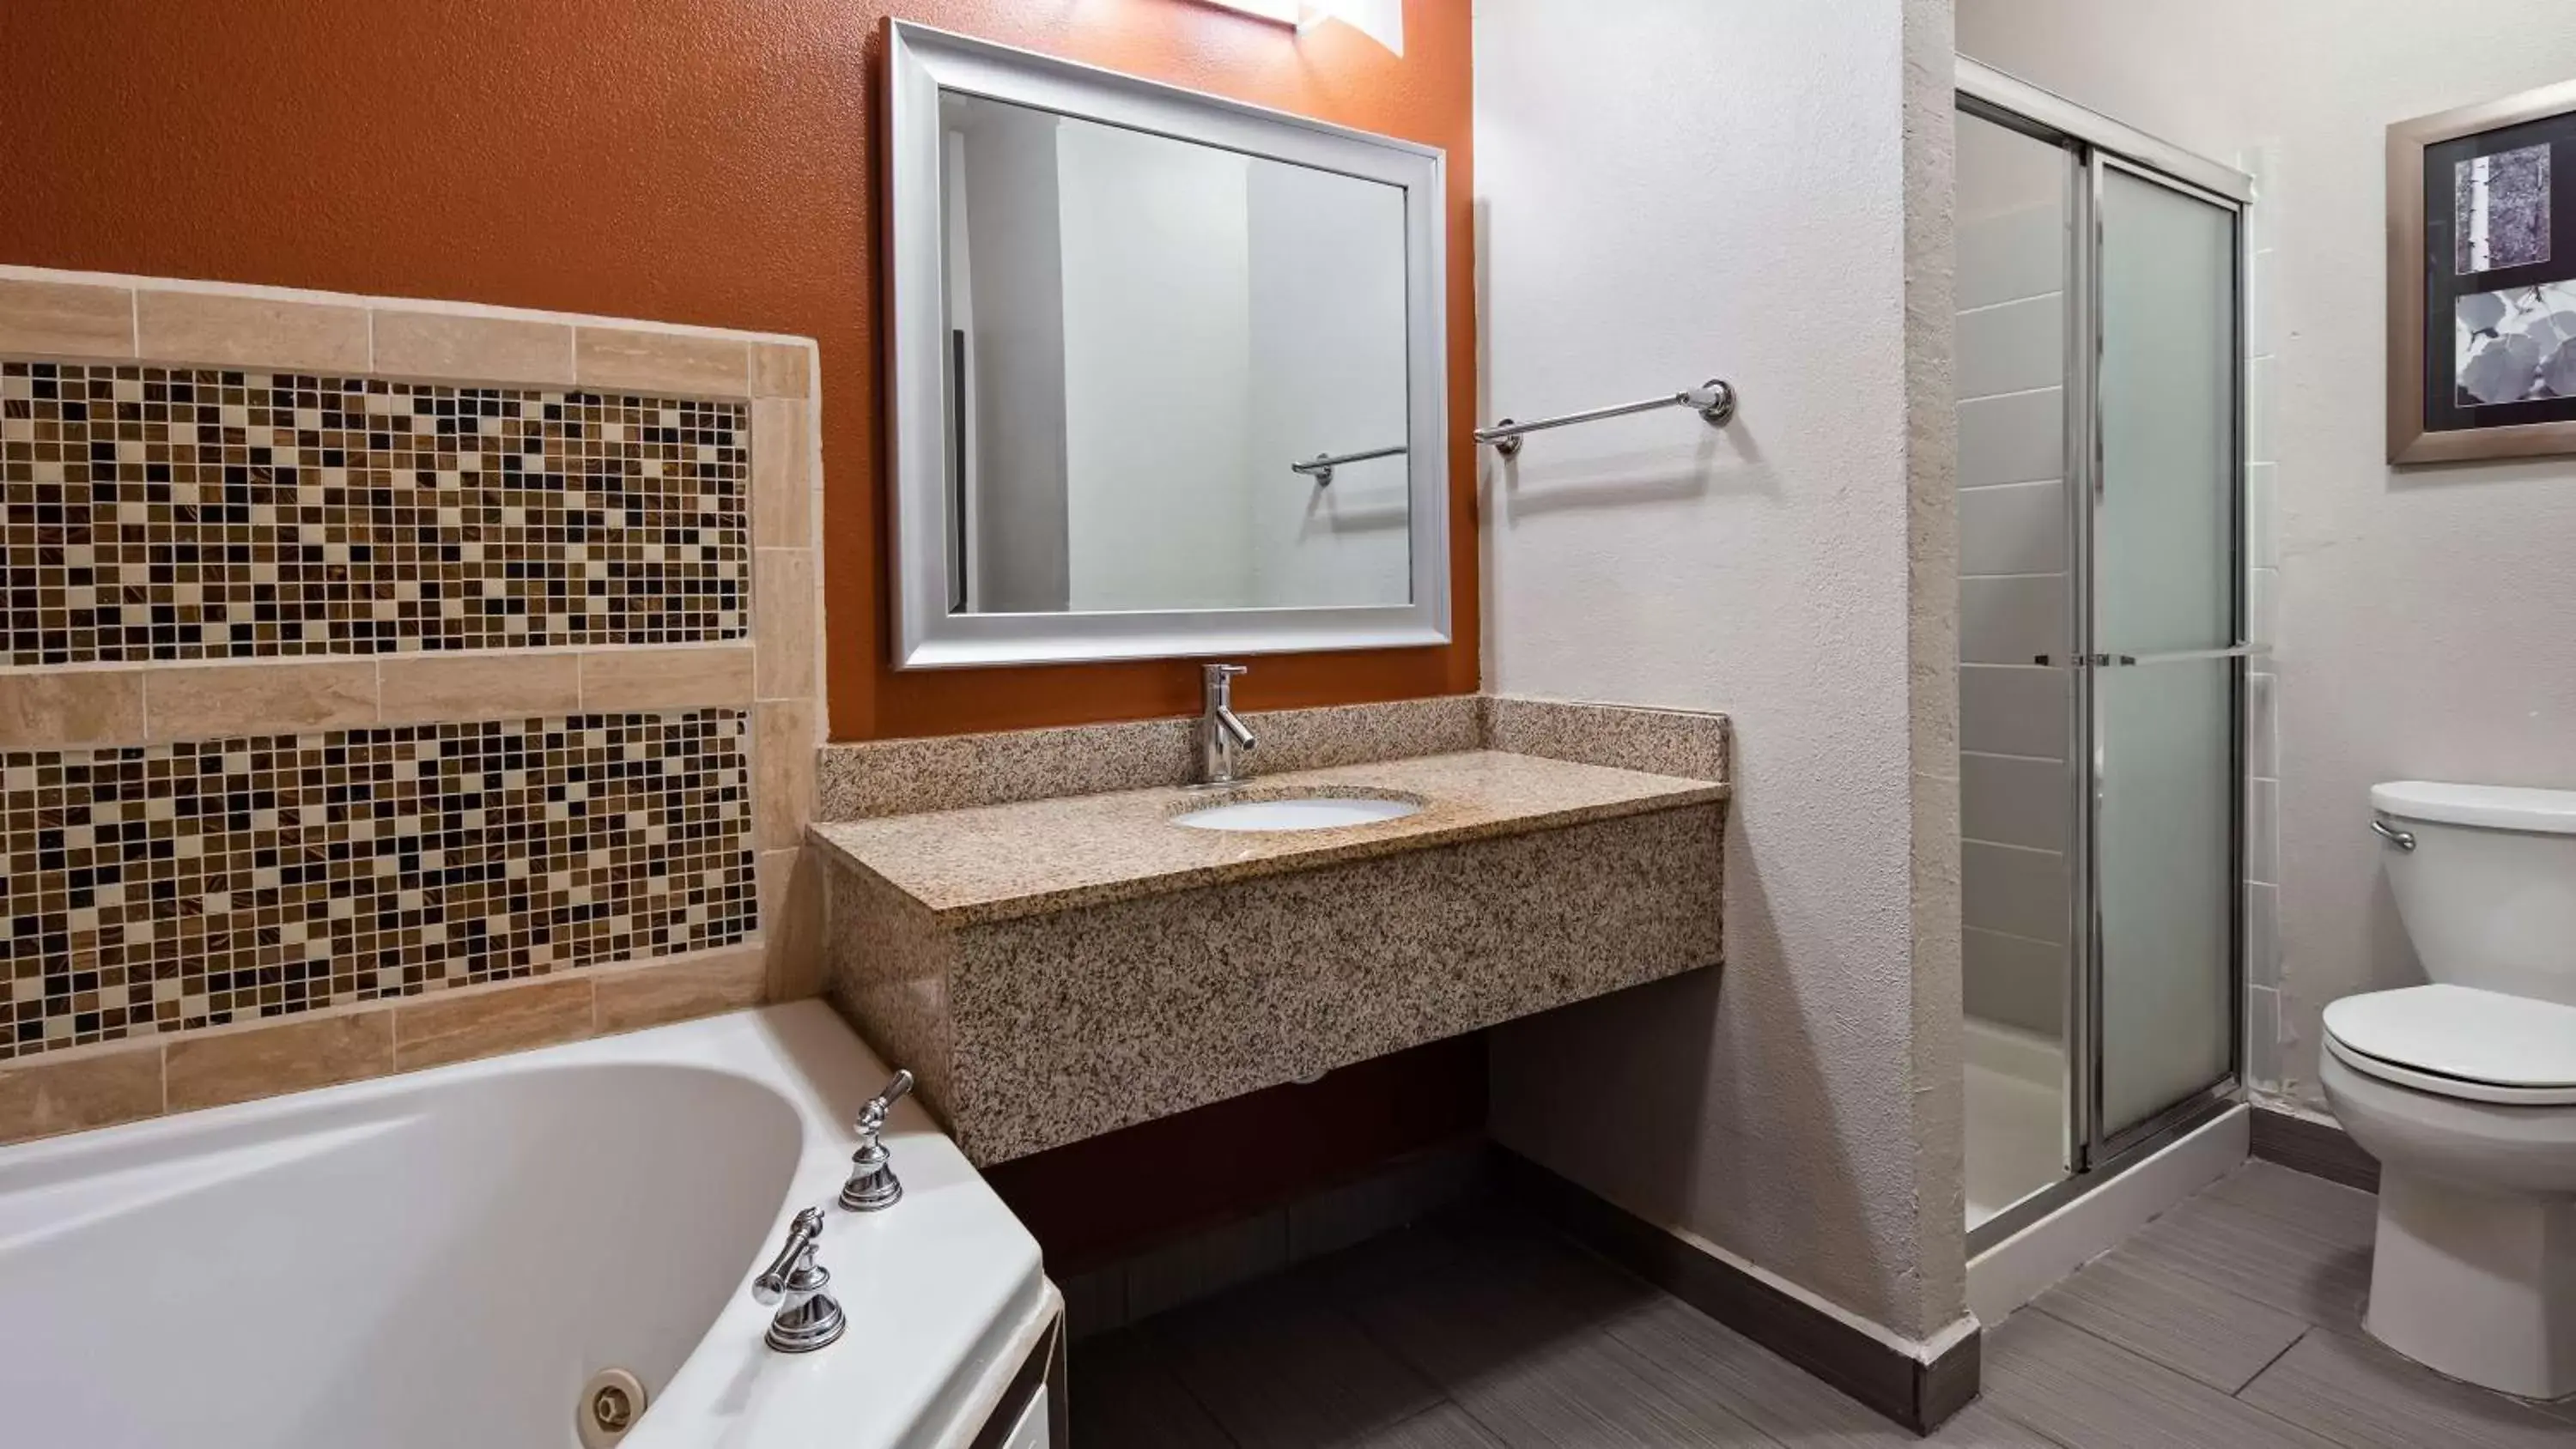 Photo of the whole room, Bathroom in Best Western Plus Lee's Summit Hotel & Suites